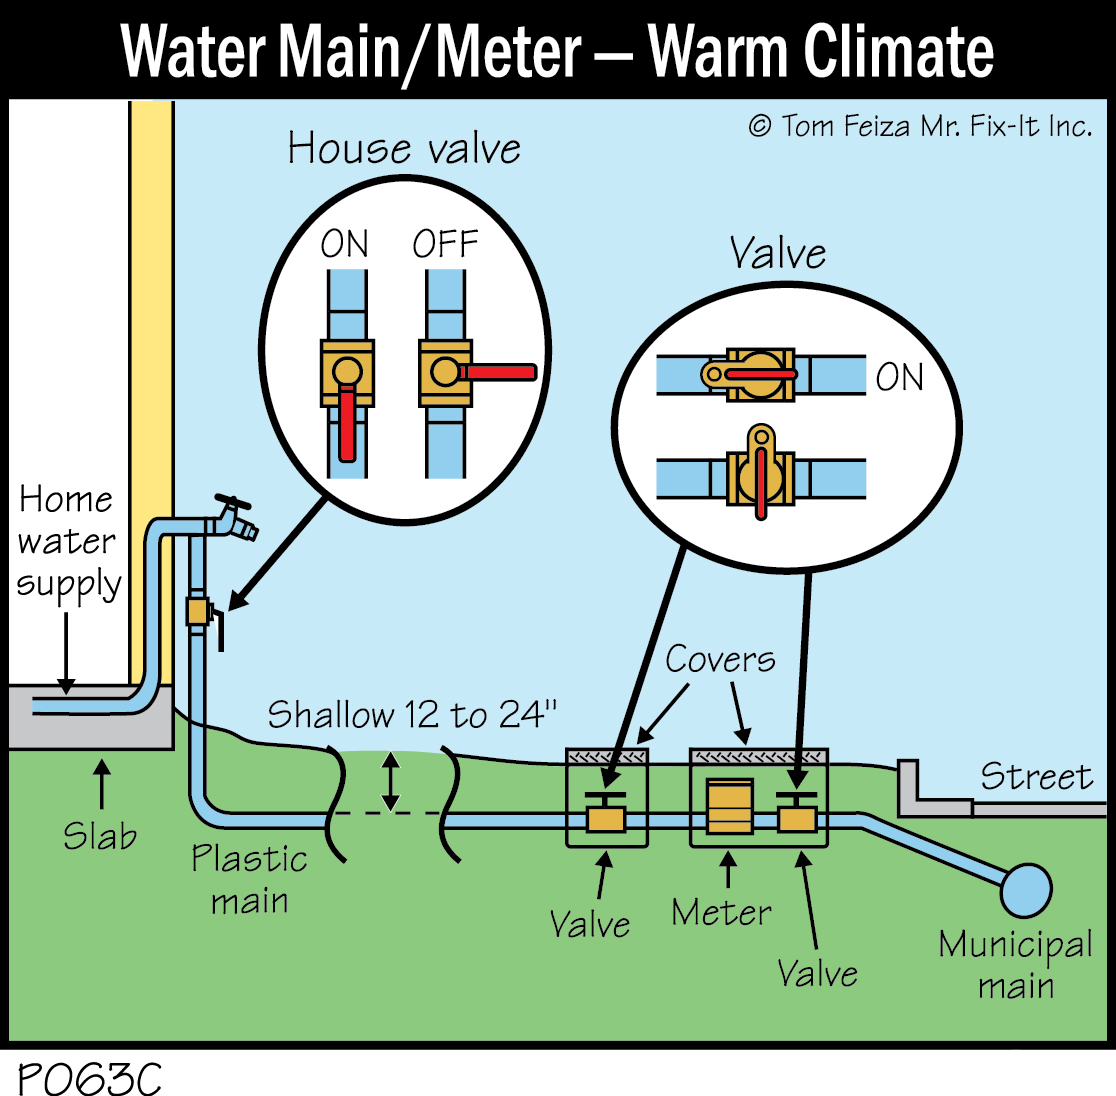 P063C - Water Main Meter - Warm Climate